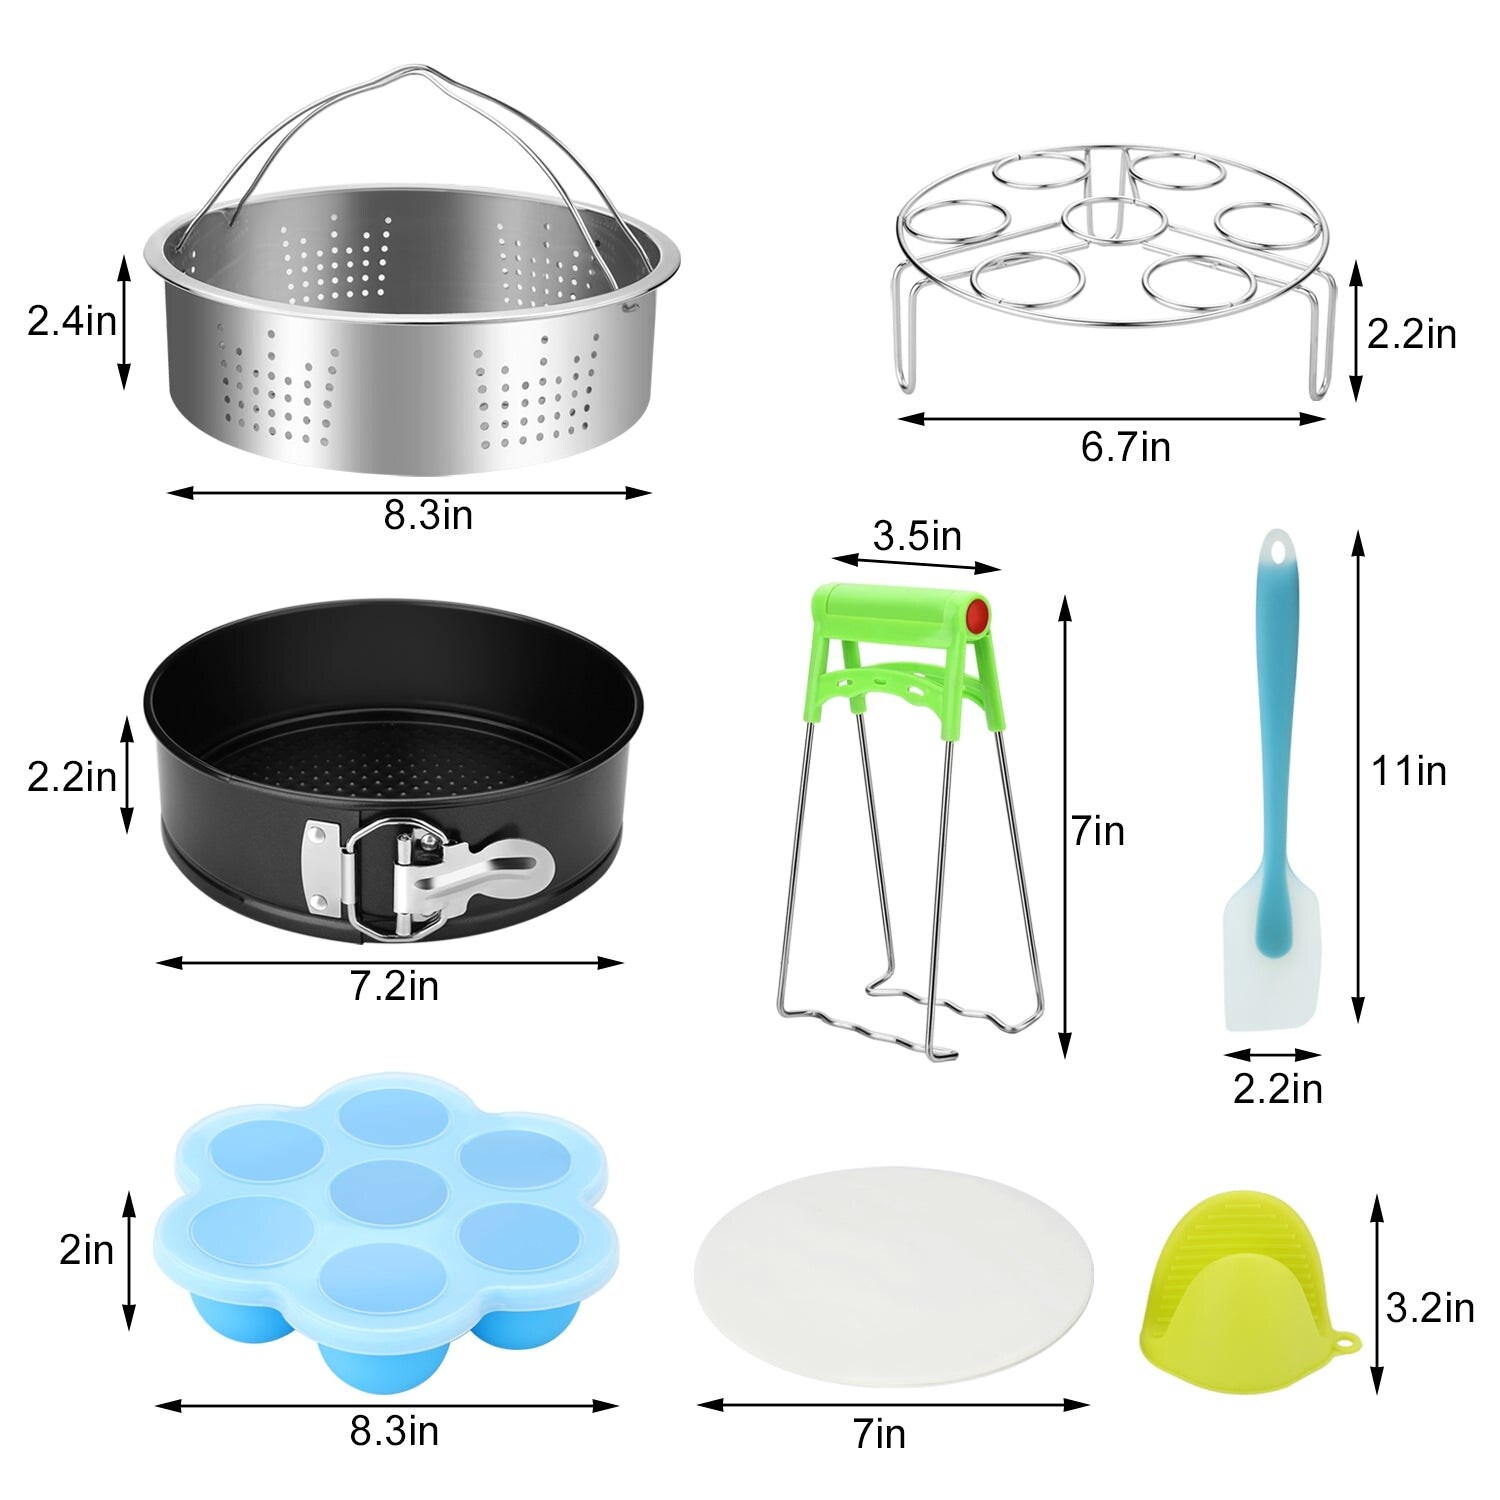 https://ak1.ostkcdn.com/images/products/is/images/direct/85b712f244bc6470b55ef77f858d75bd422eaab7/8-Pack-Steamer-Basket-Egg-Steam-Rack-Camping-Cooking-Set.jpg